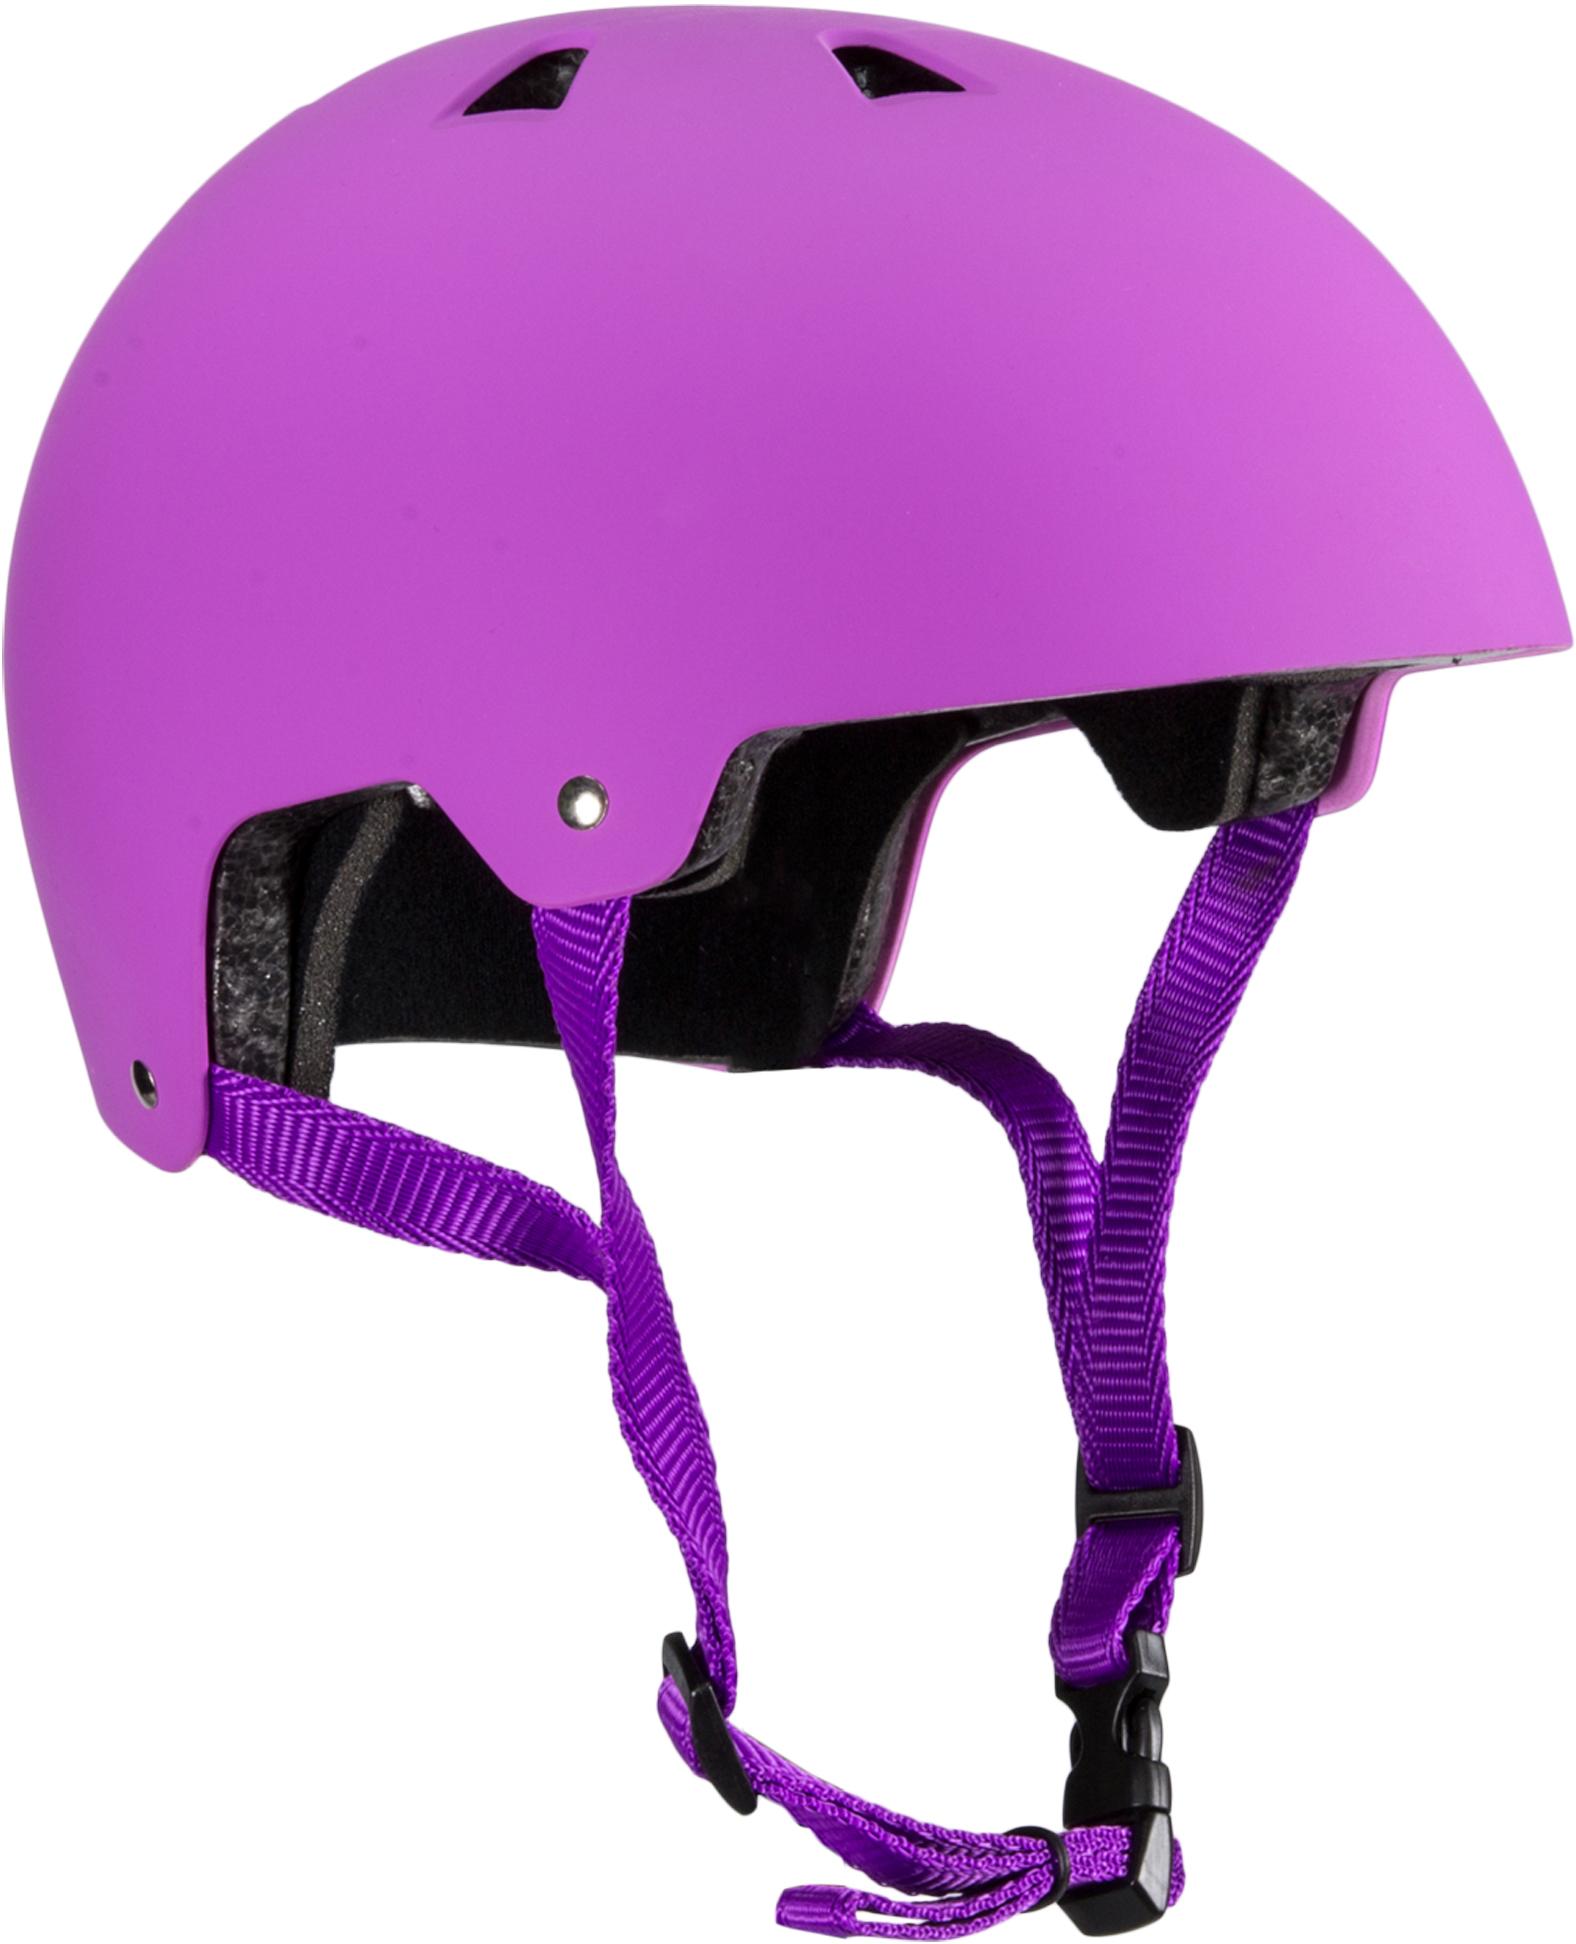 Harsh Abs Helmet Pink, Small (51-55Cm)